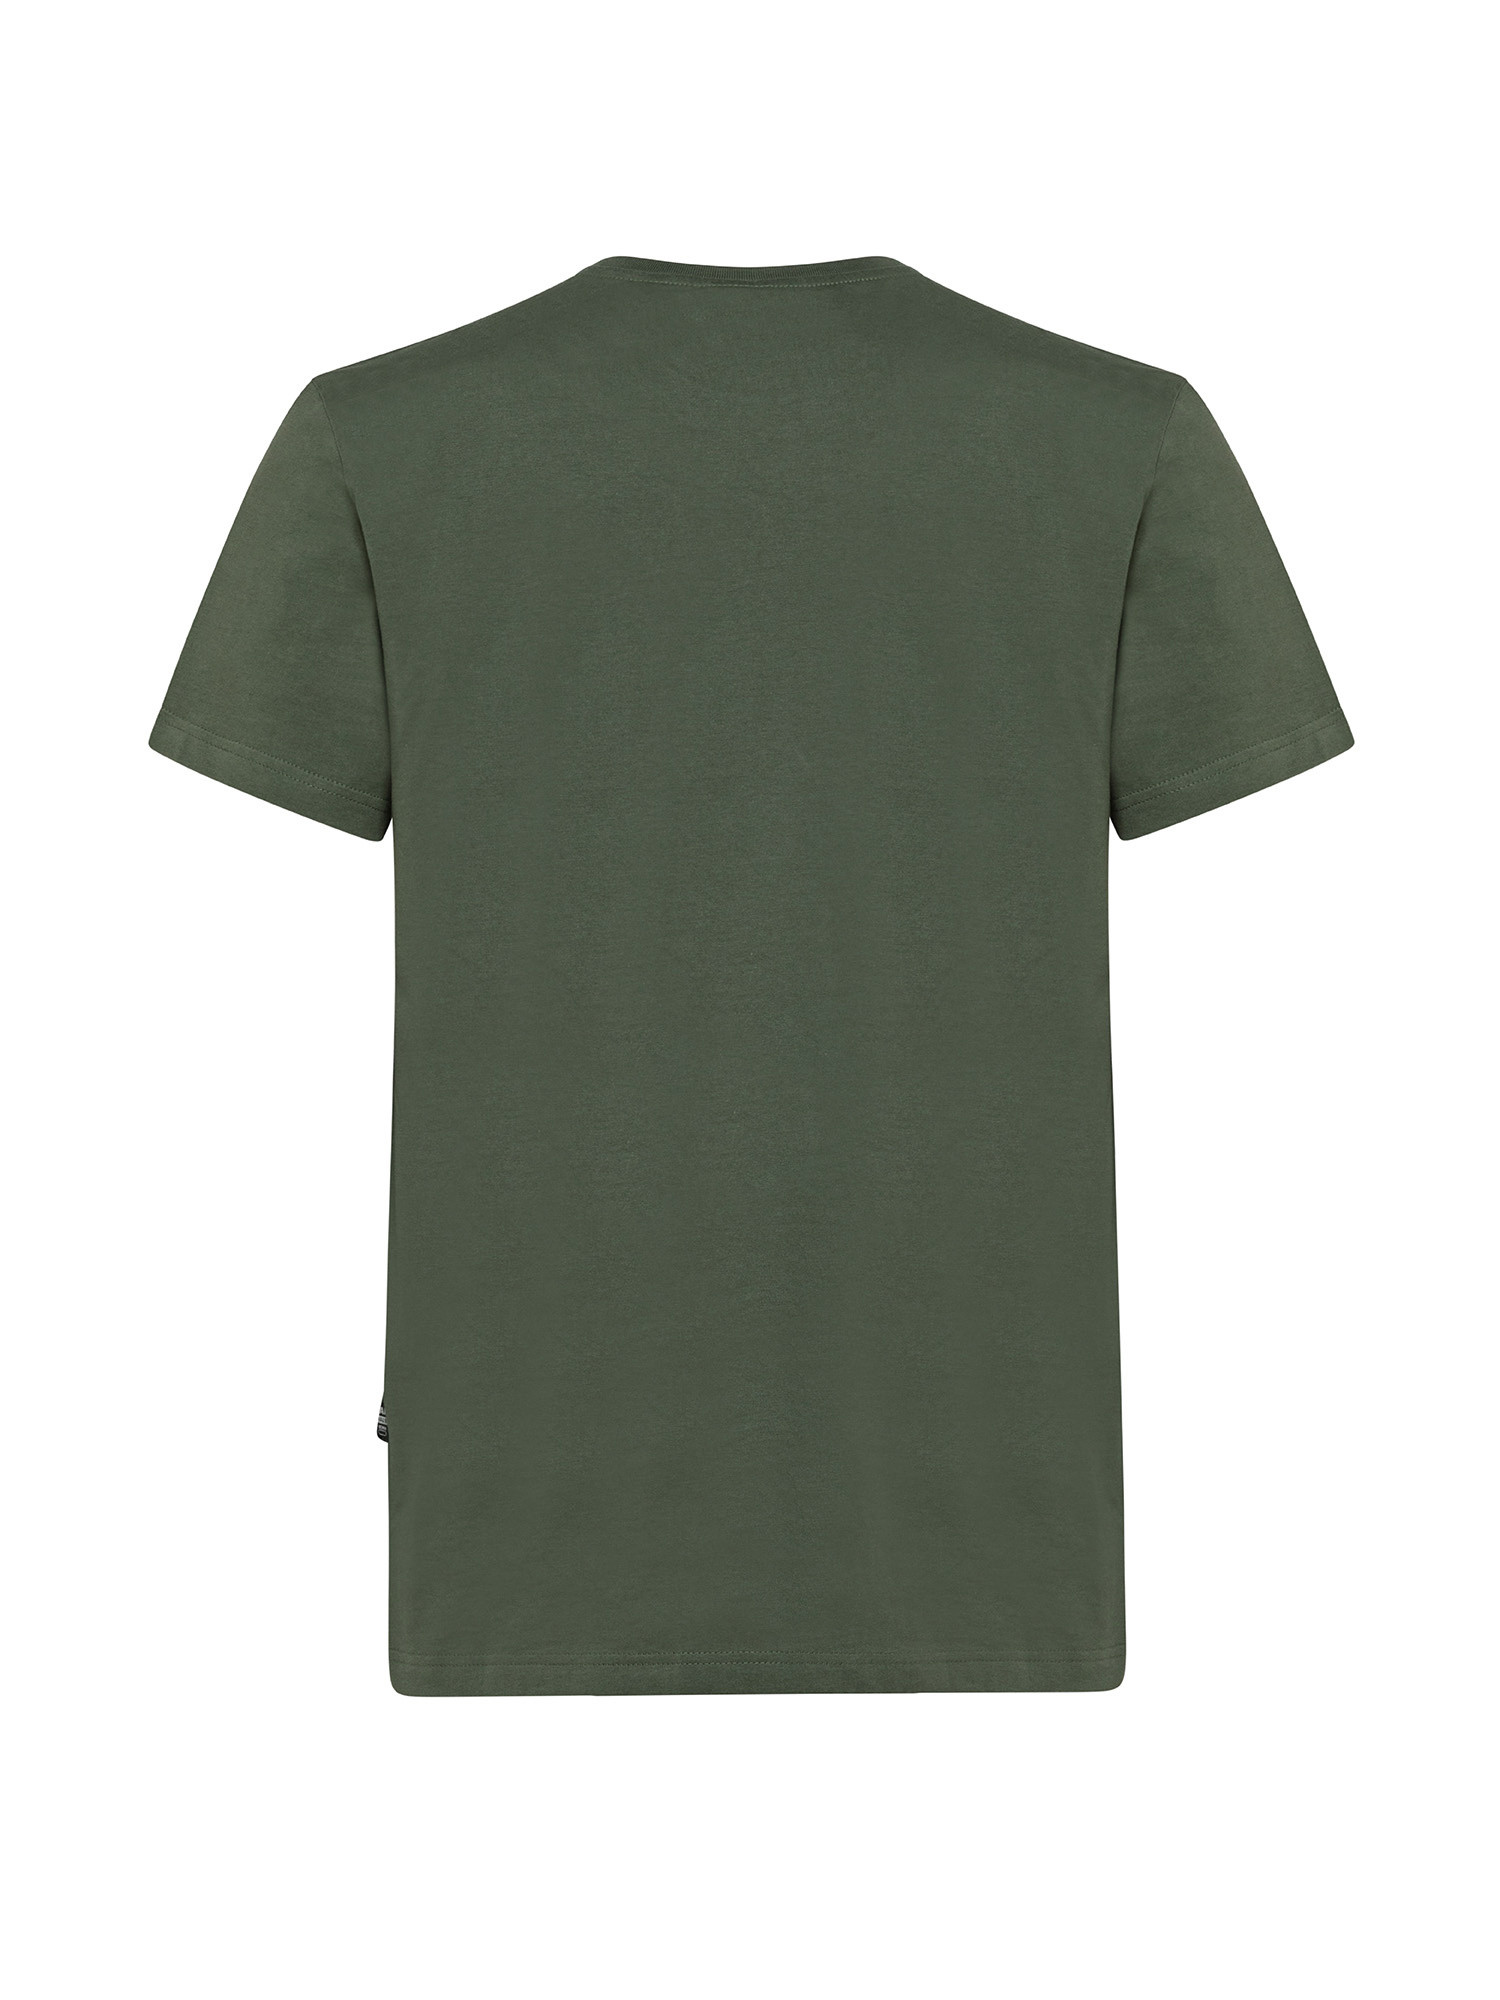 G-Star - T-shirt con stampa, Verde oliva, large image number 1